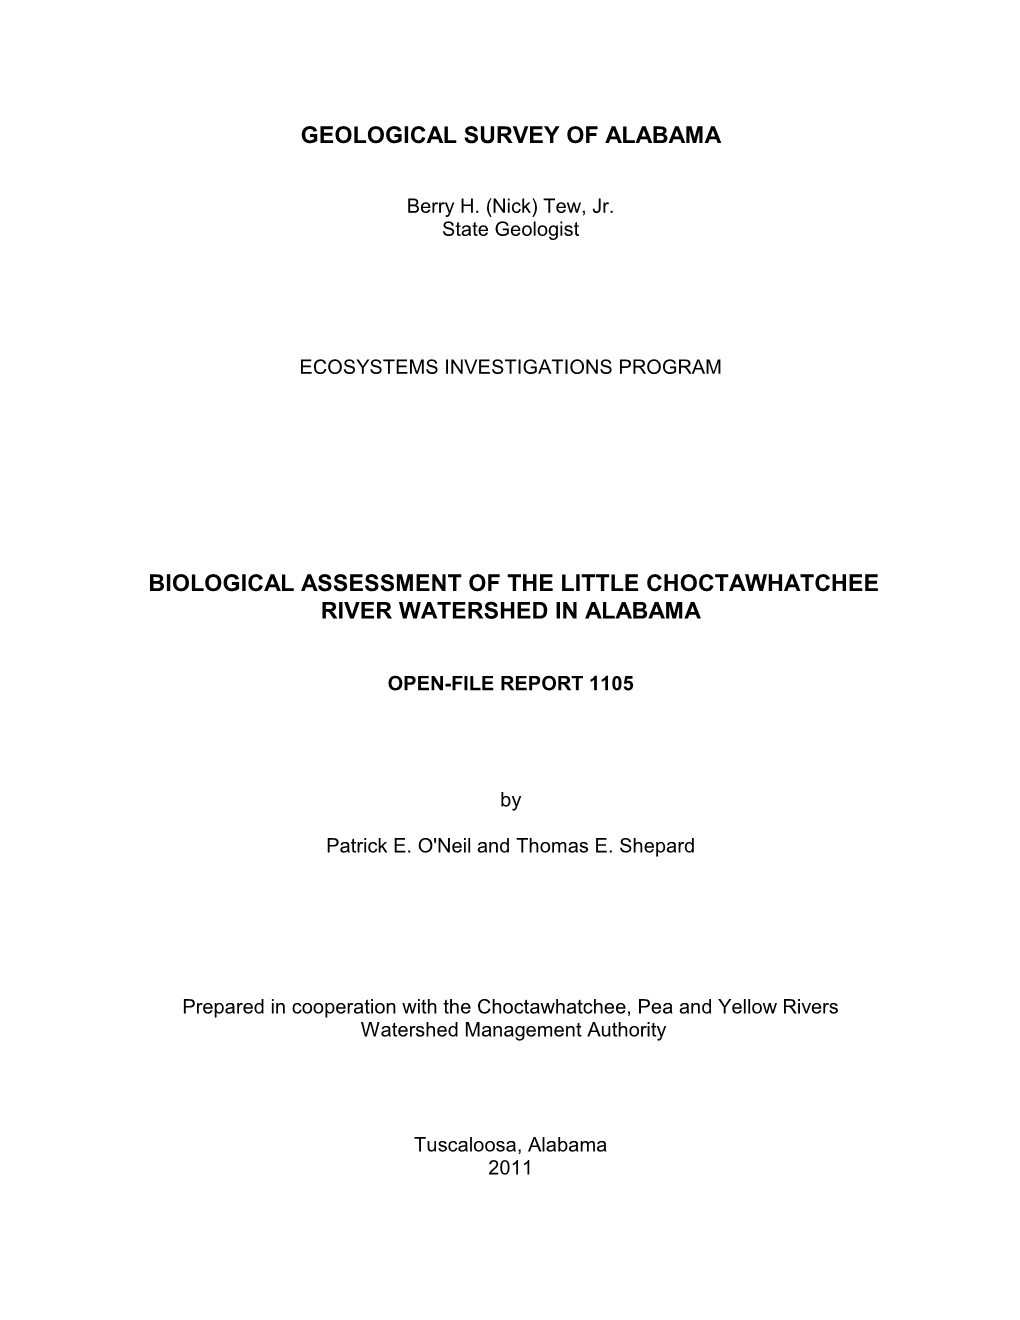 Geological Survey of Alabama Biological